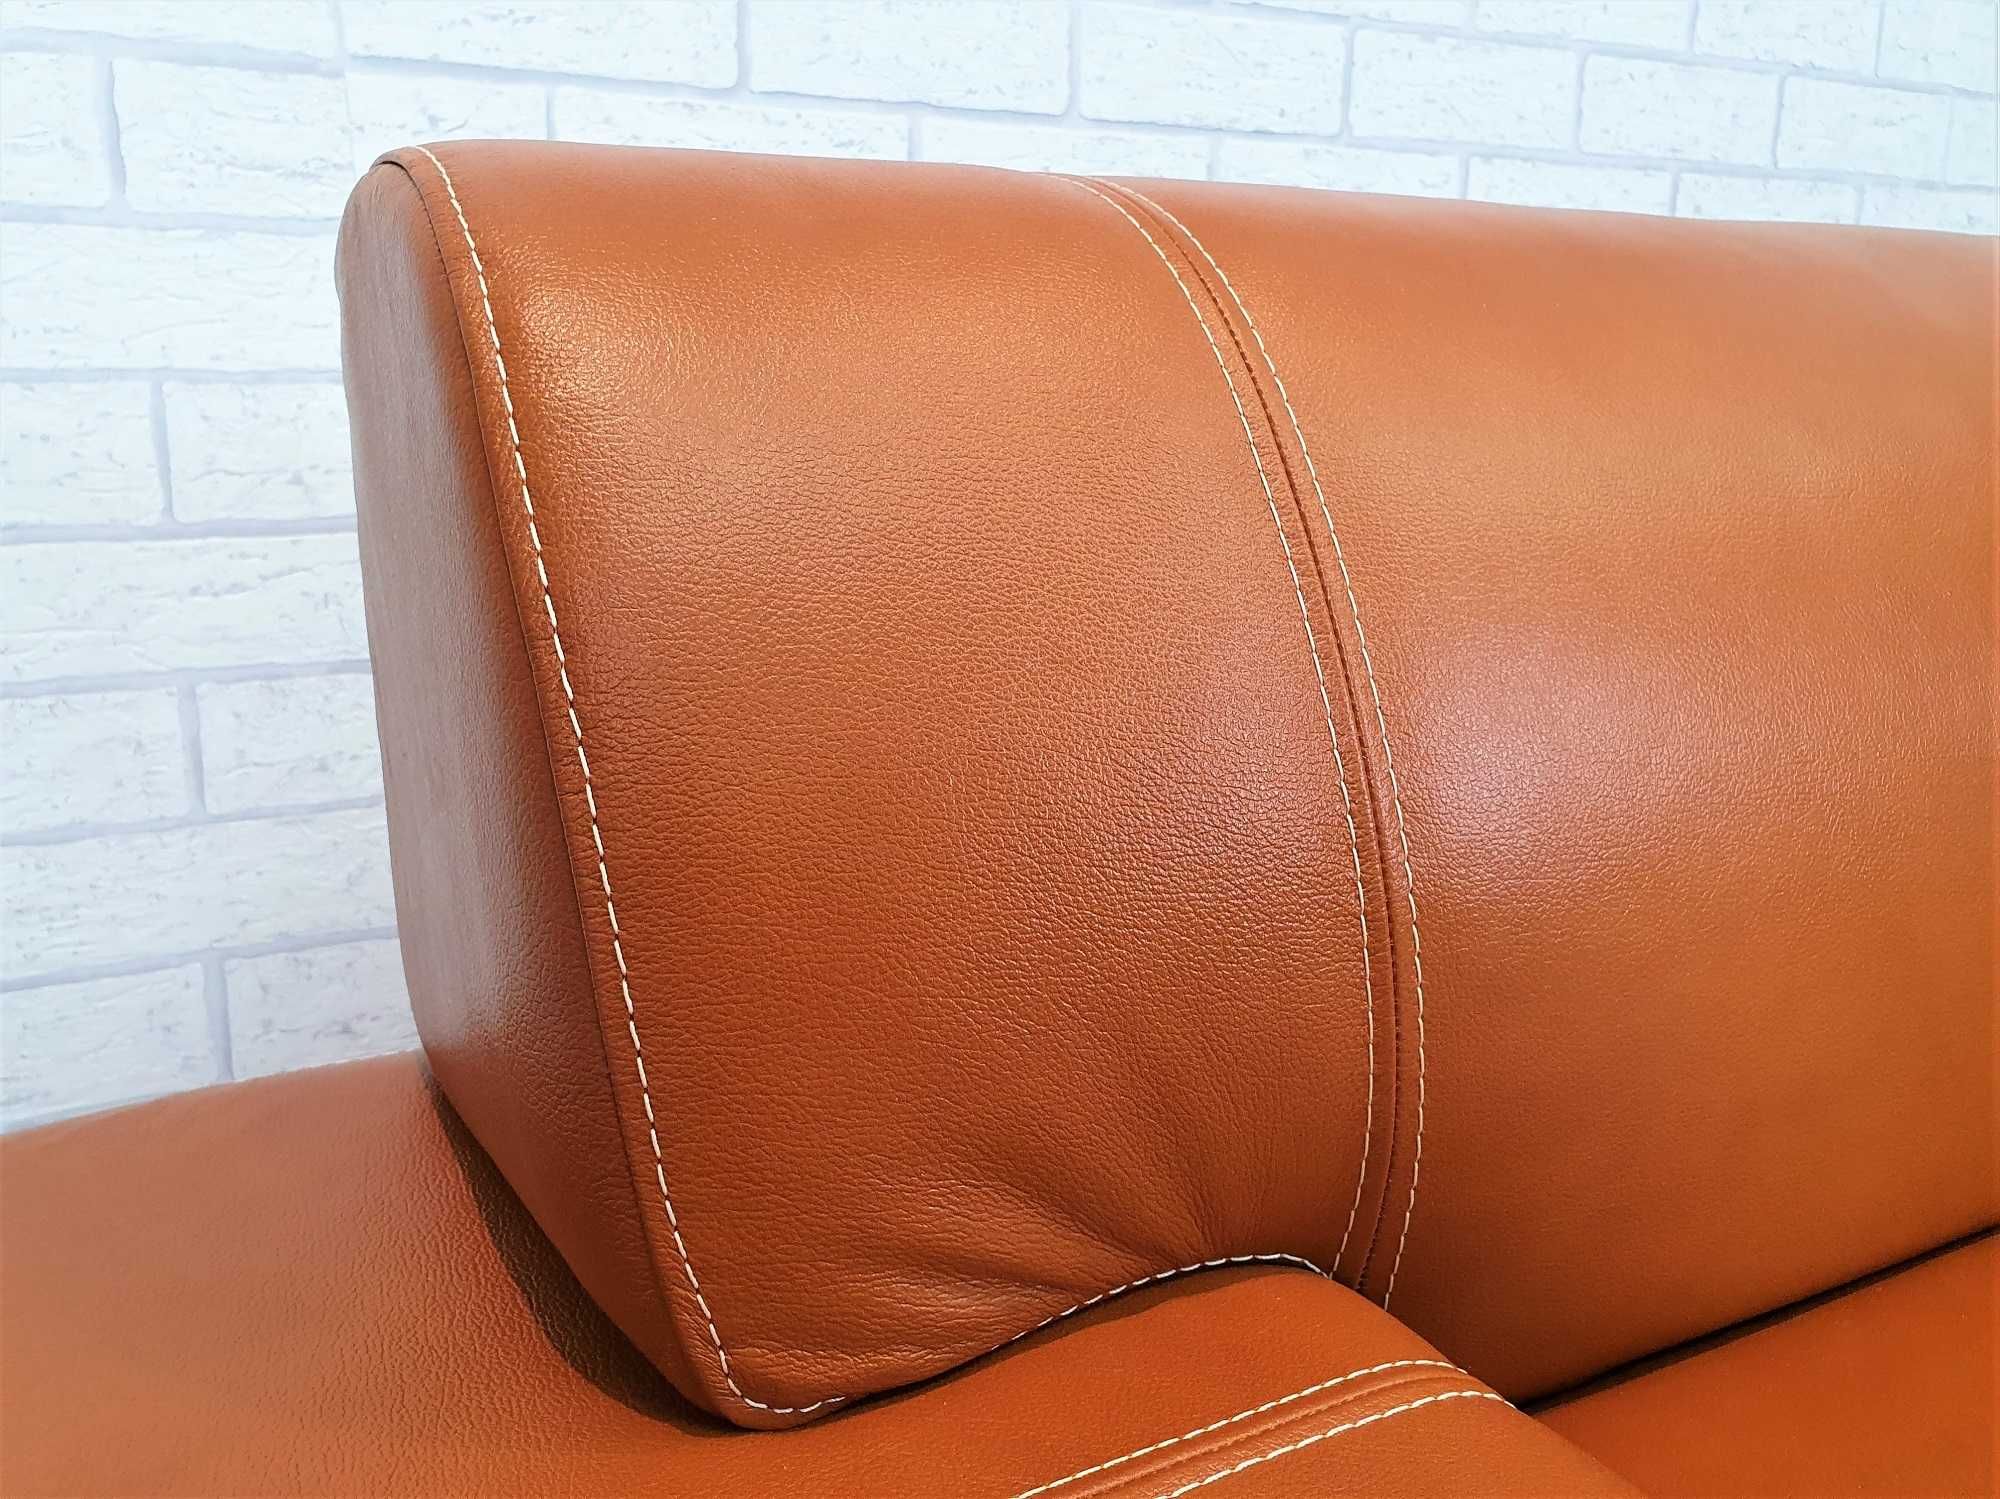 Sofa 3os + fotel ze SKÓRY zestaw skórzany 3+1 skóra naturalna 220cm